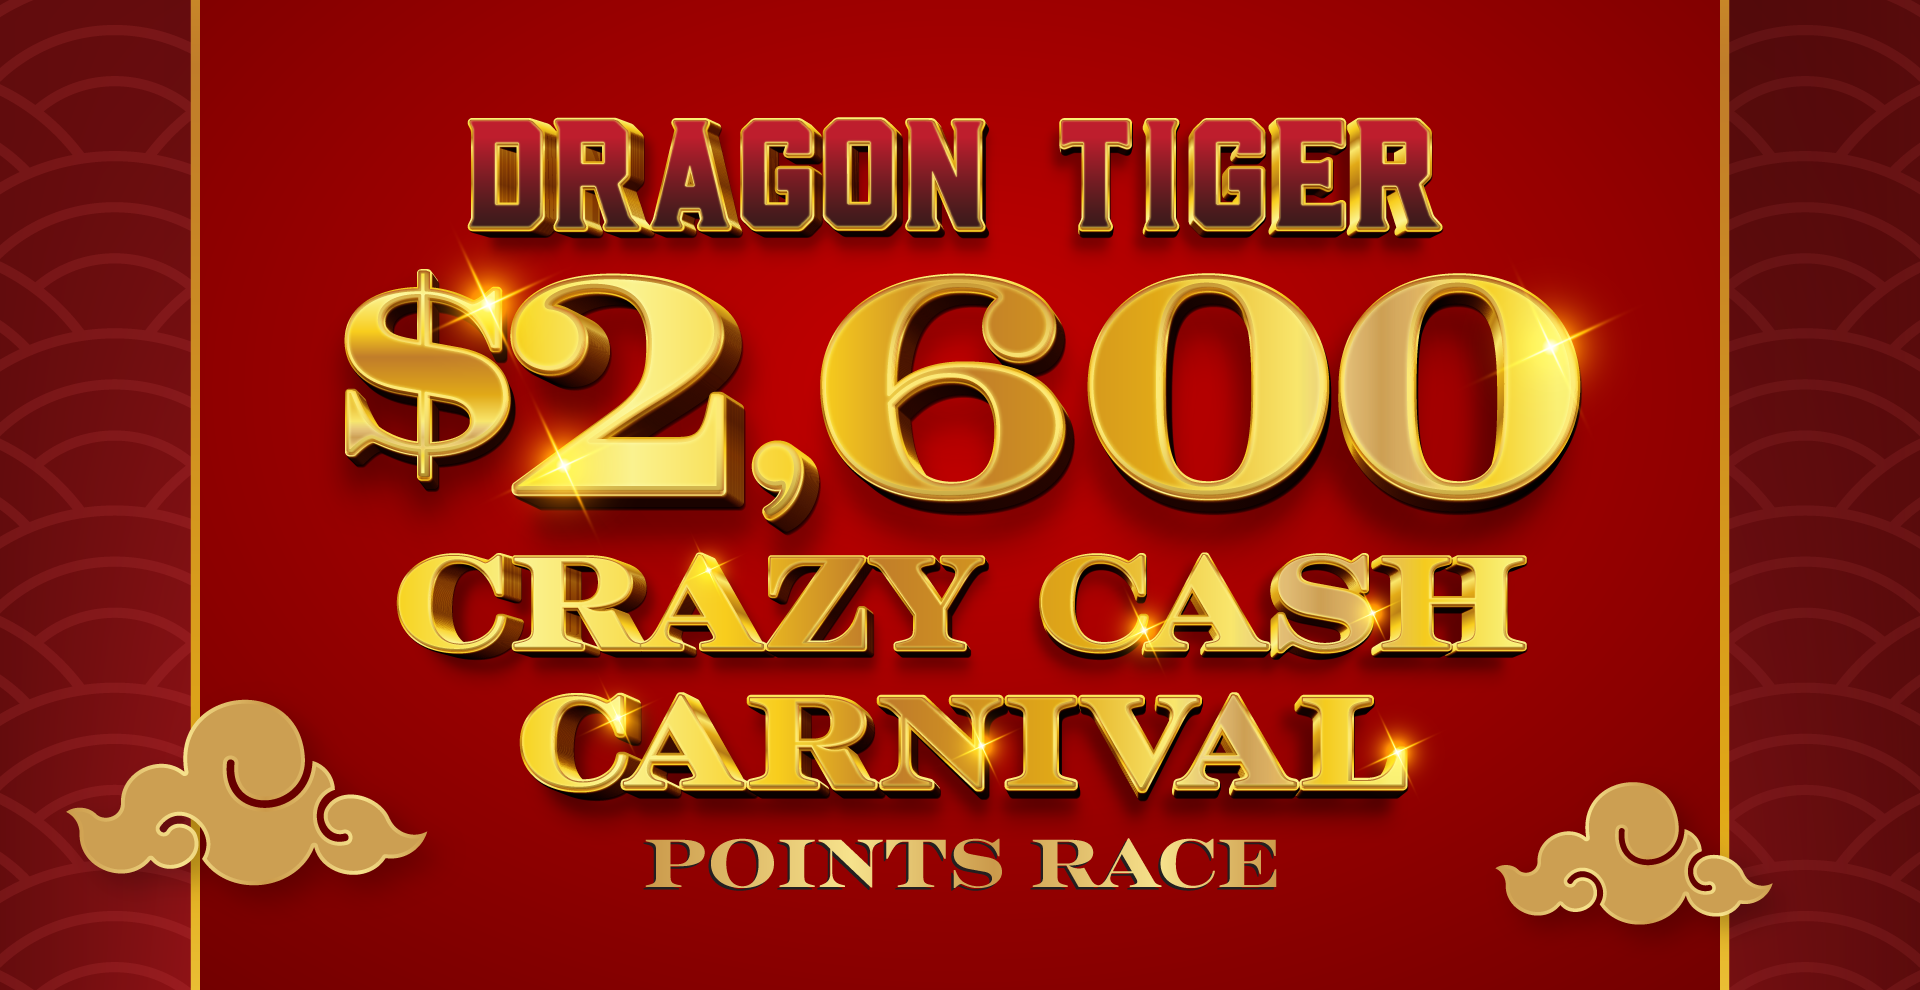 Dragon Tiger Casino Mountlake Terrace | Crazy Cash Carnival Points Race